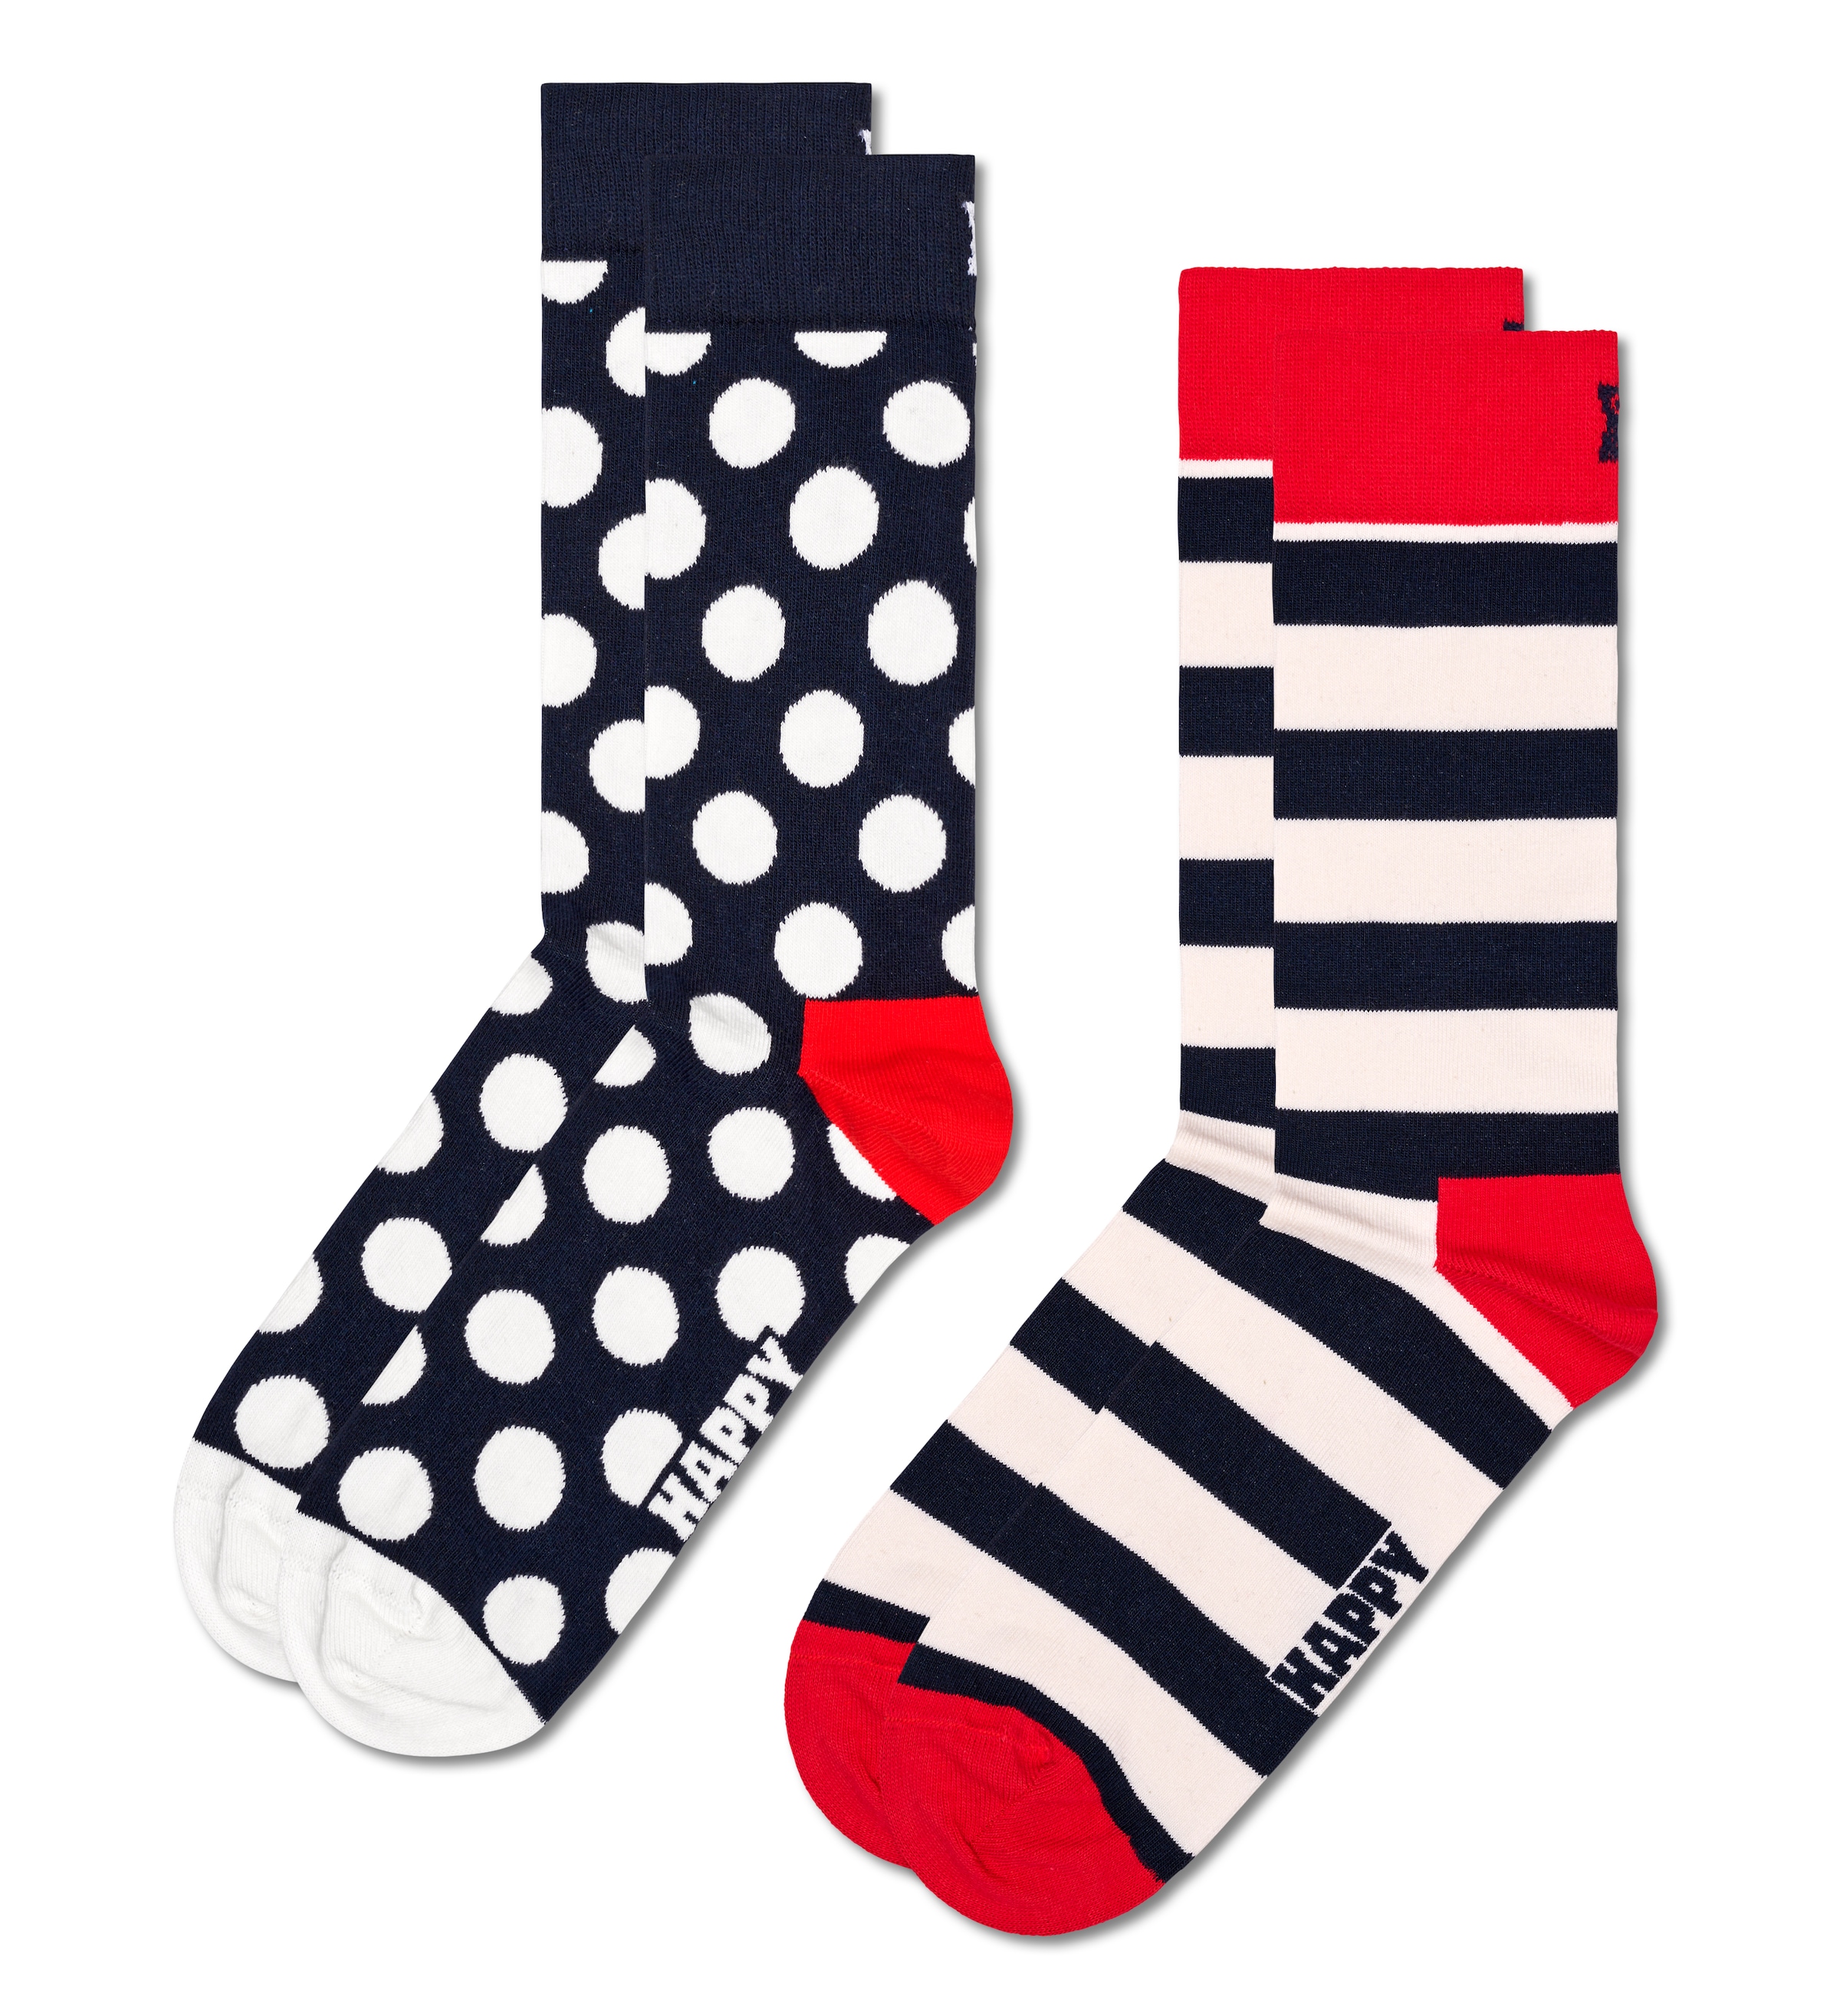 ➤ Strümpfe & Socken ohne Mindestbestellwert shoppen